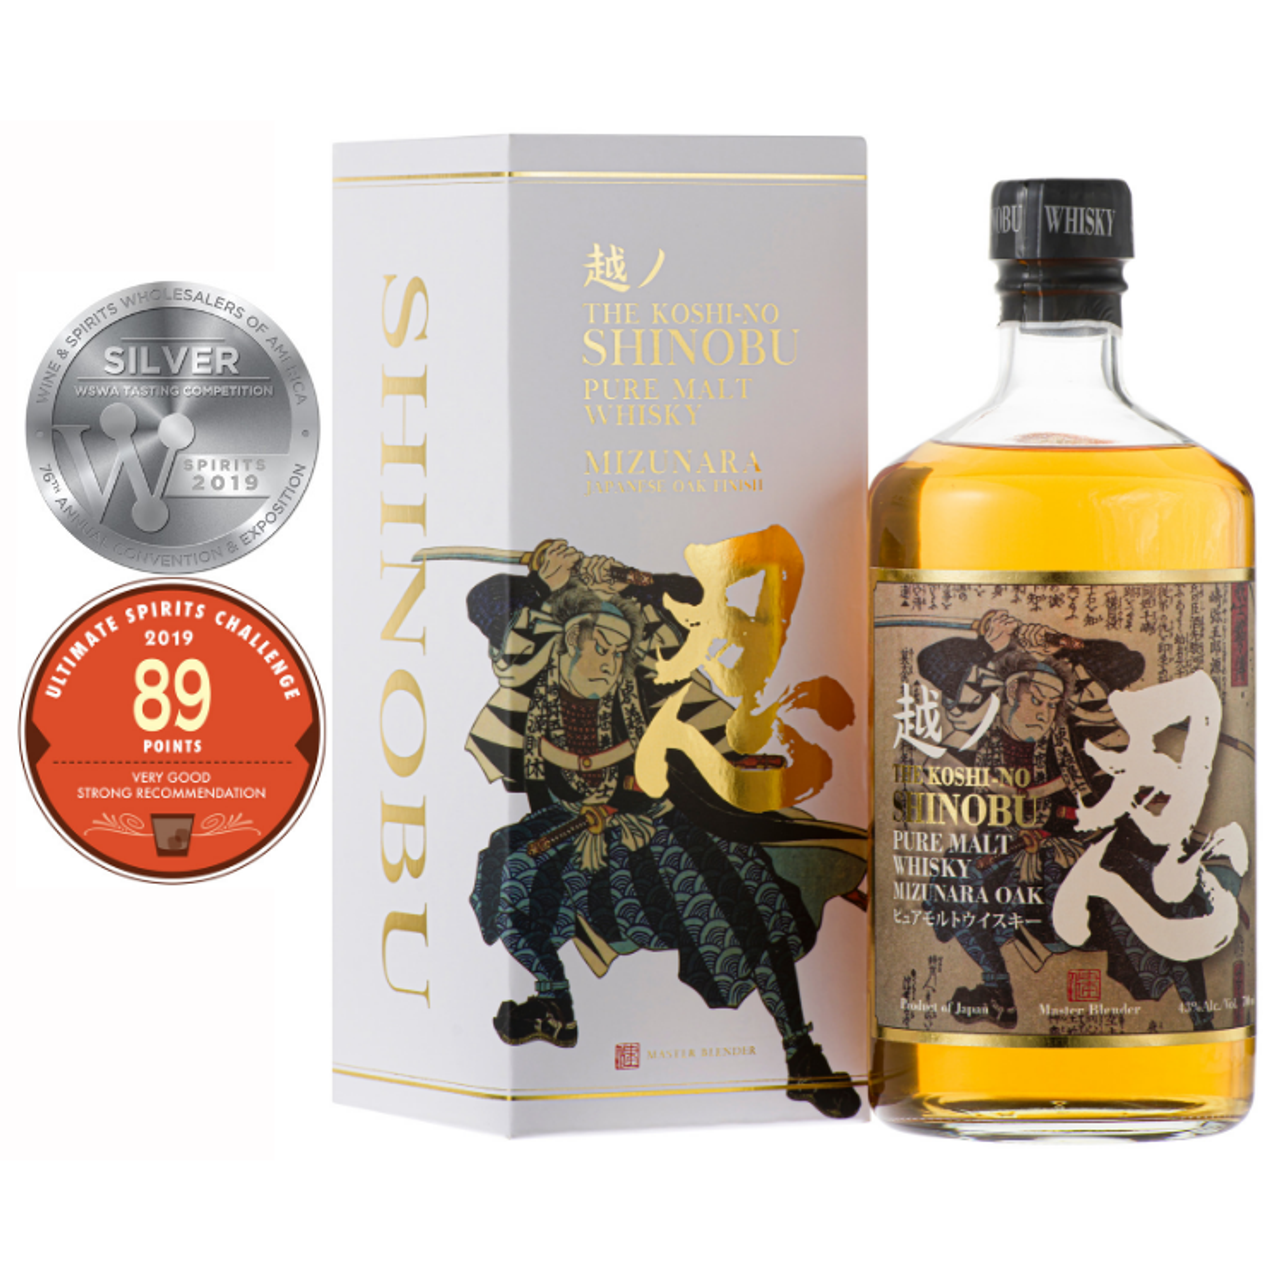 Shinobu Pure Malt Whisky Mizunara Japanese Oak Finish [700ml]